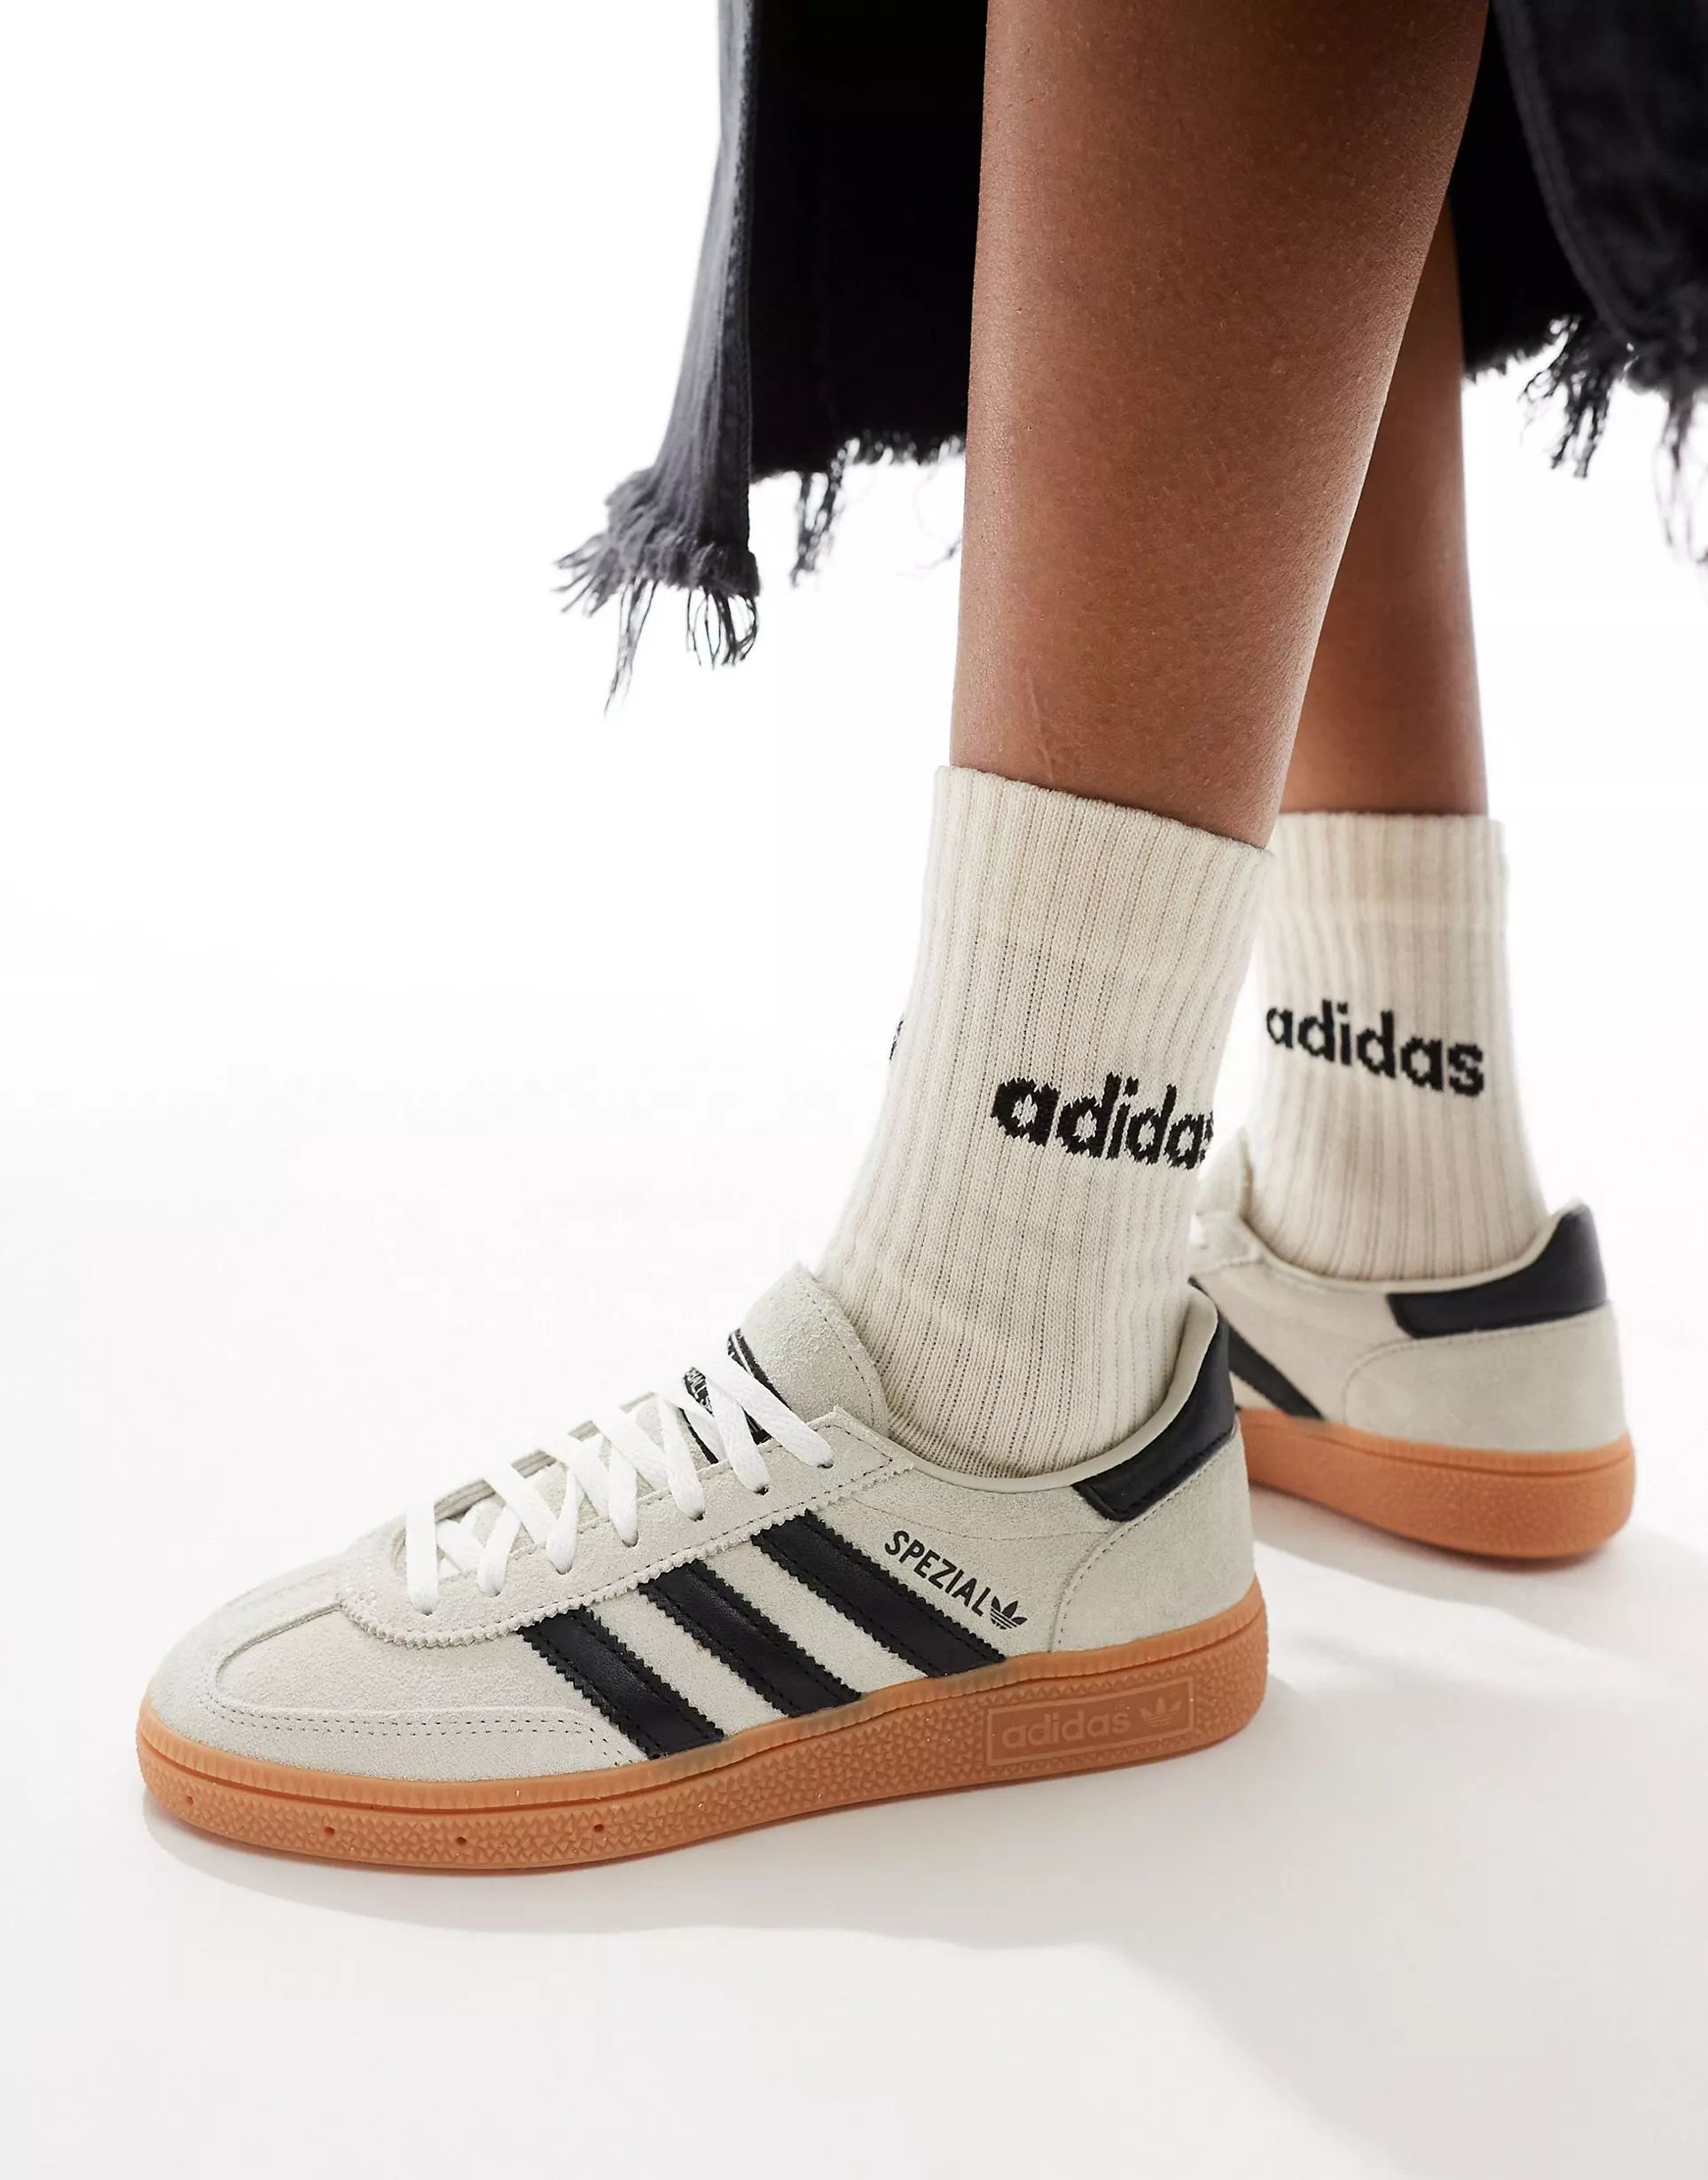 adidas Originals Handball Spezial trainers in cream and black with gum sole | ASOS (Global)